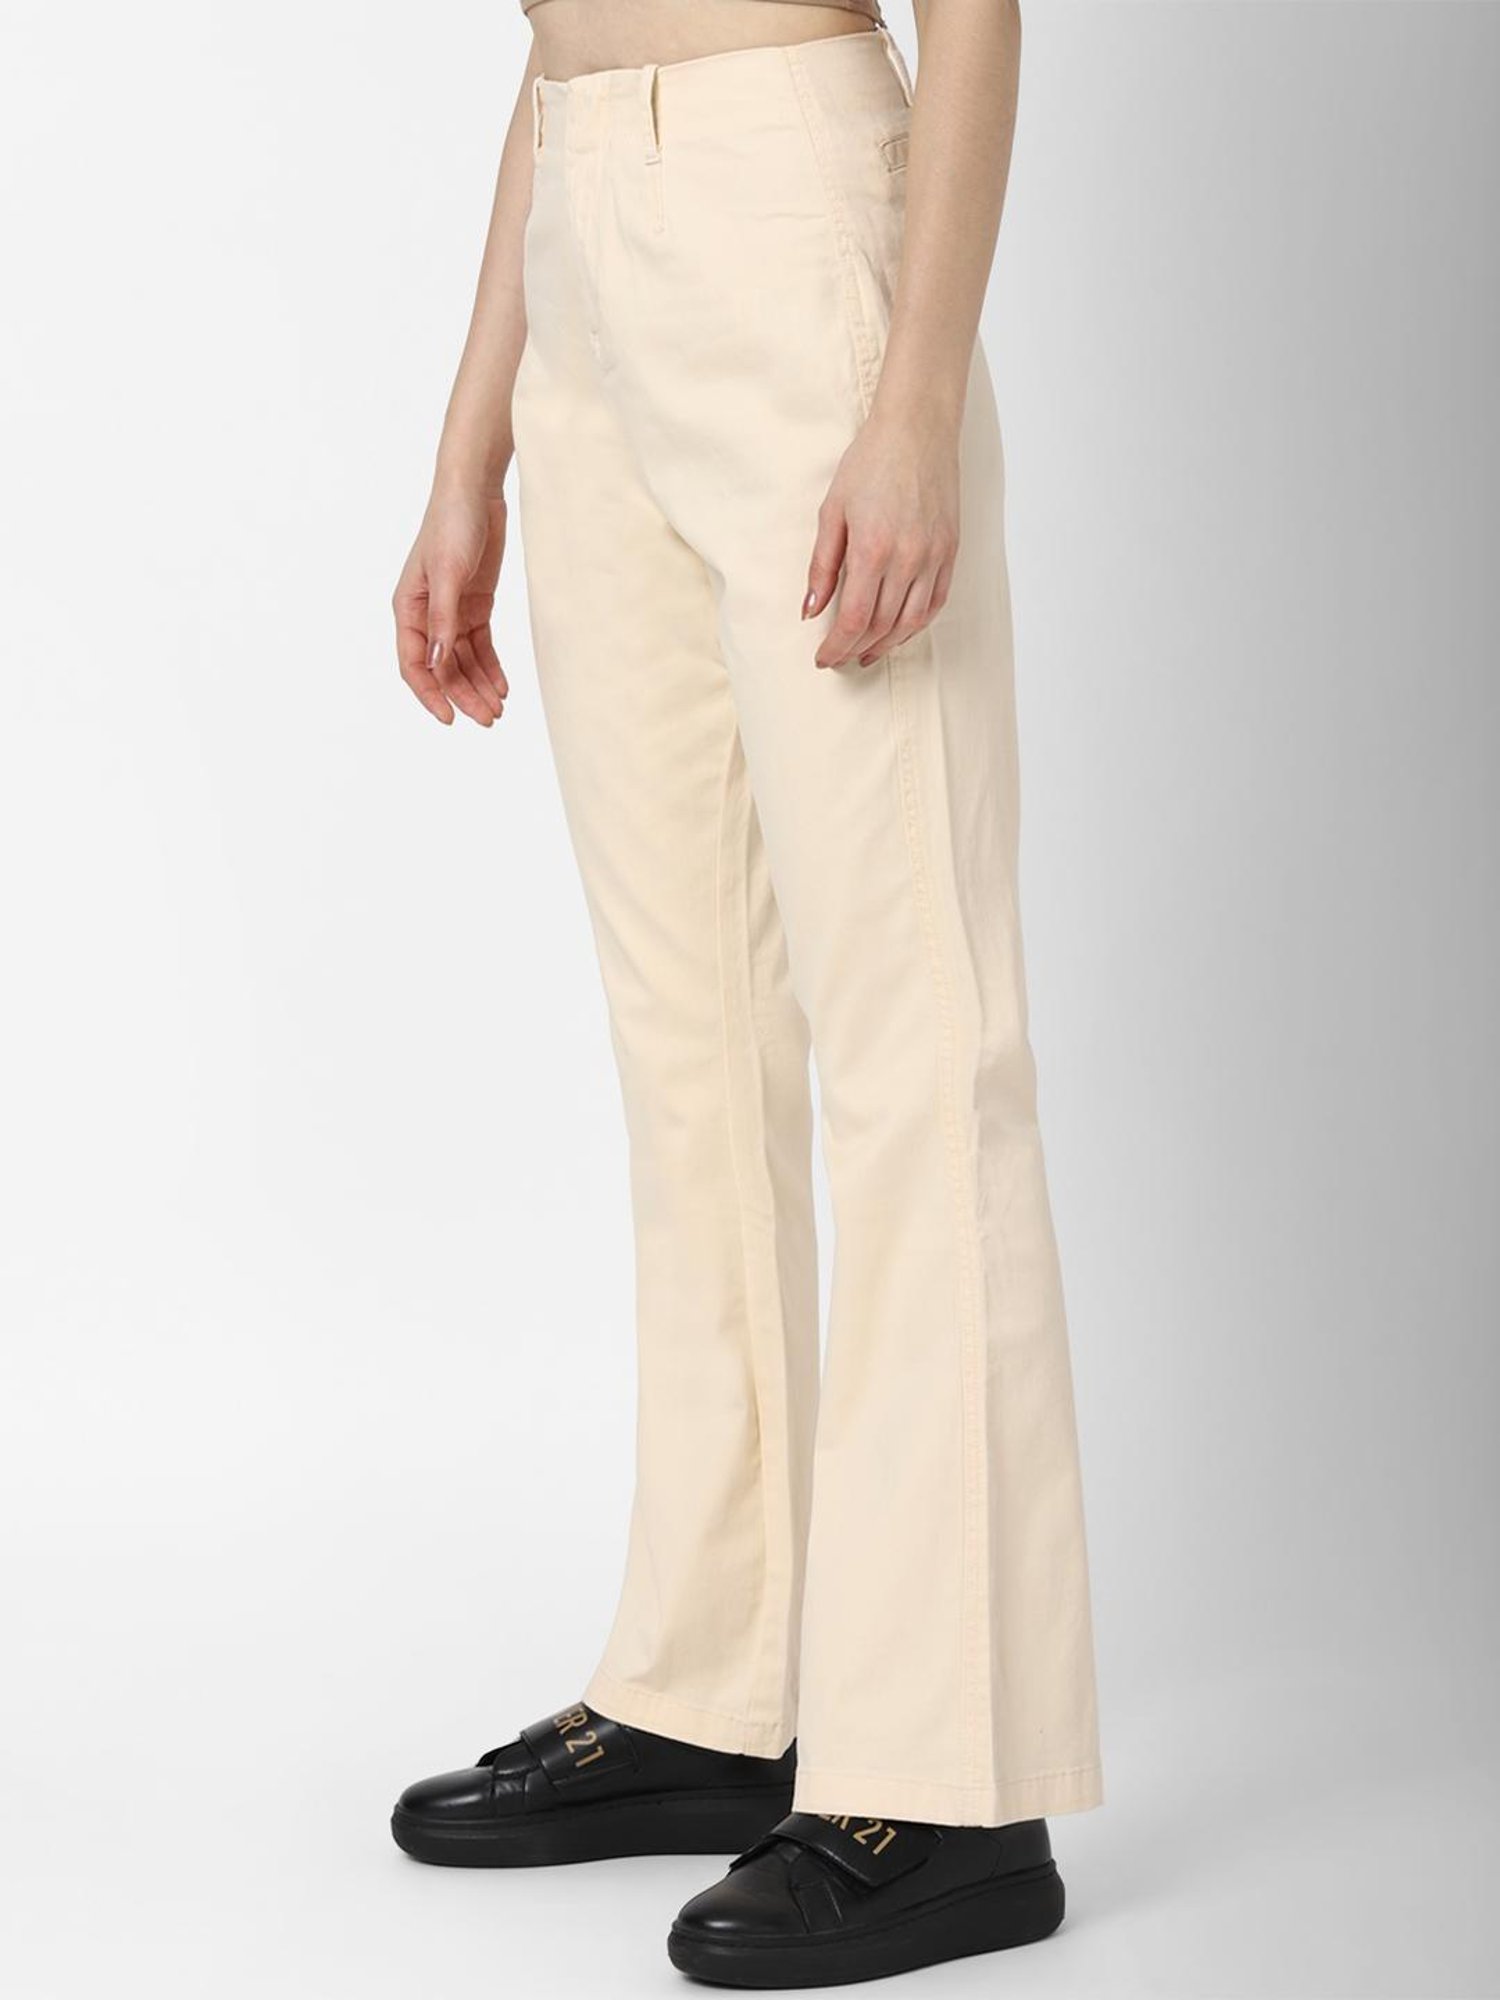 Buy Moomaya Printed Palazzo Pants For Women, Loose Fit Elastic Waist  Pajamas Online at Best Prices in India - JioMart.